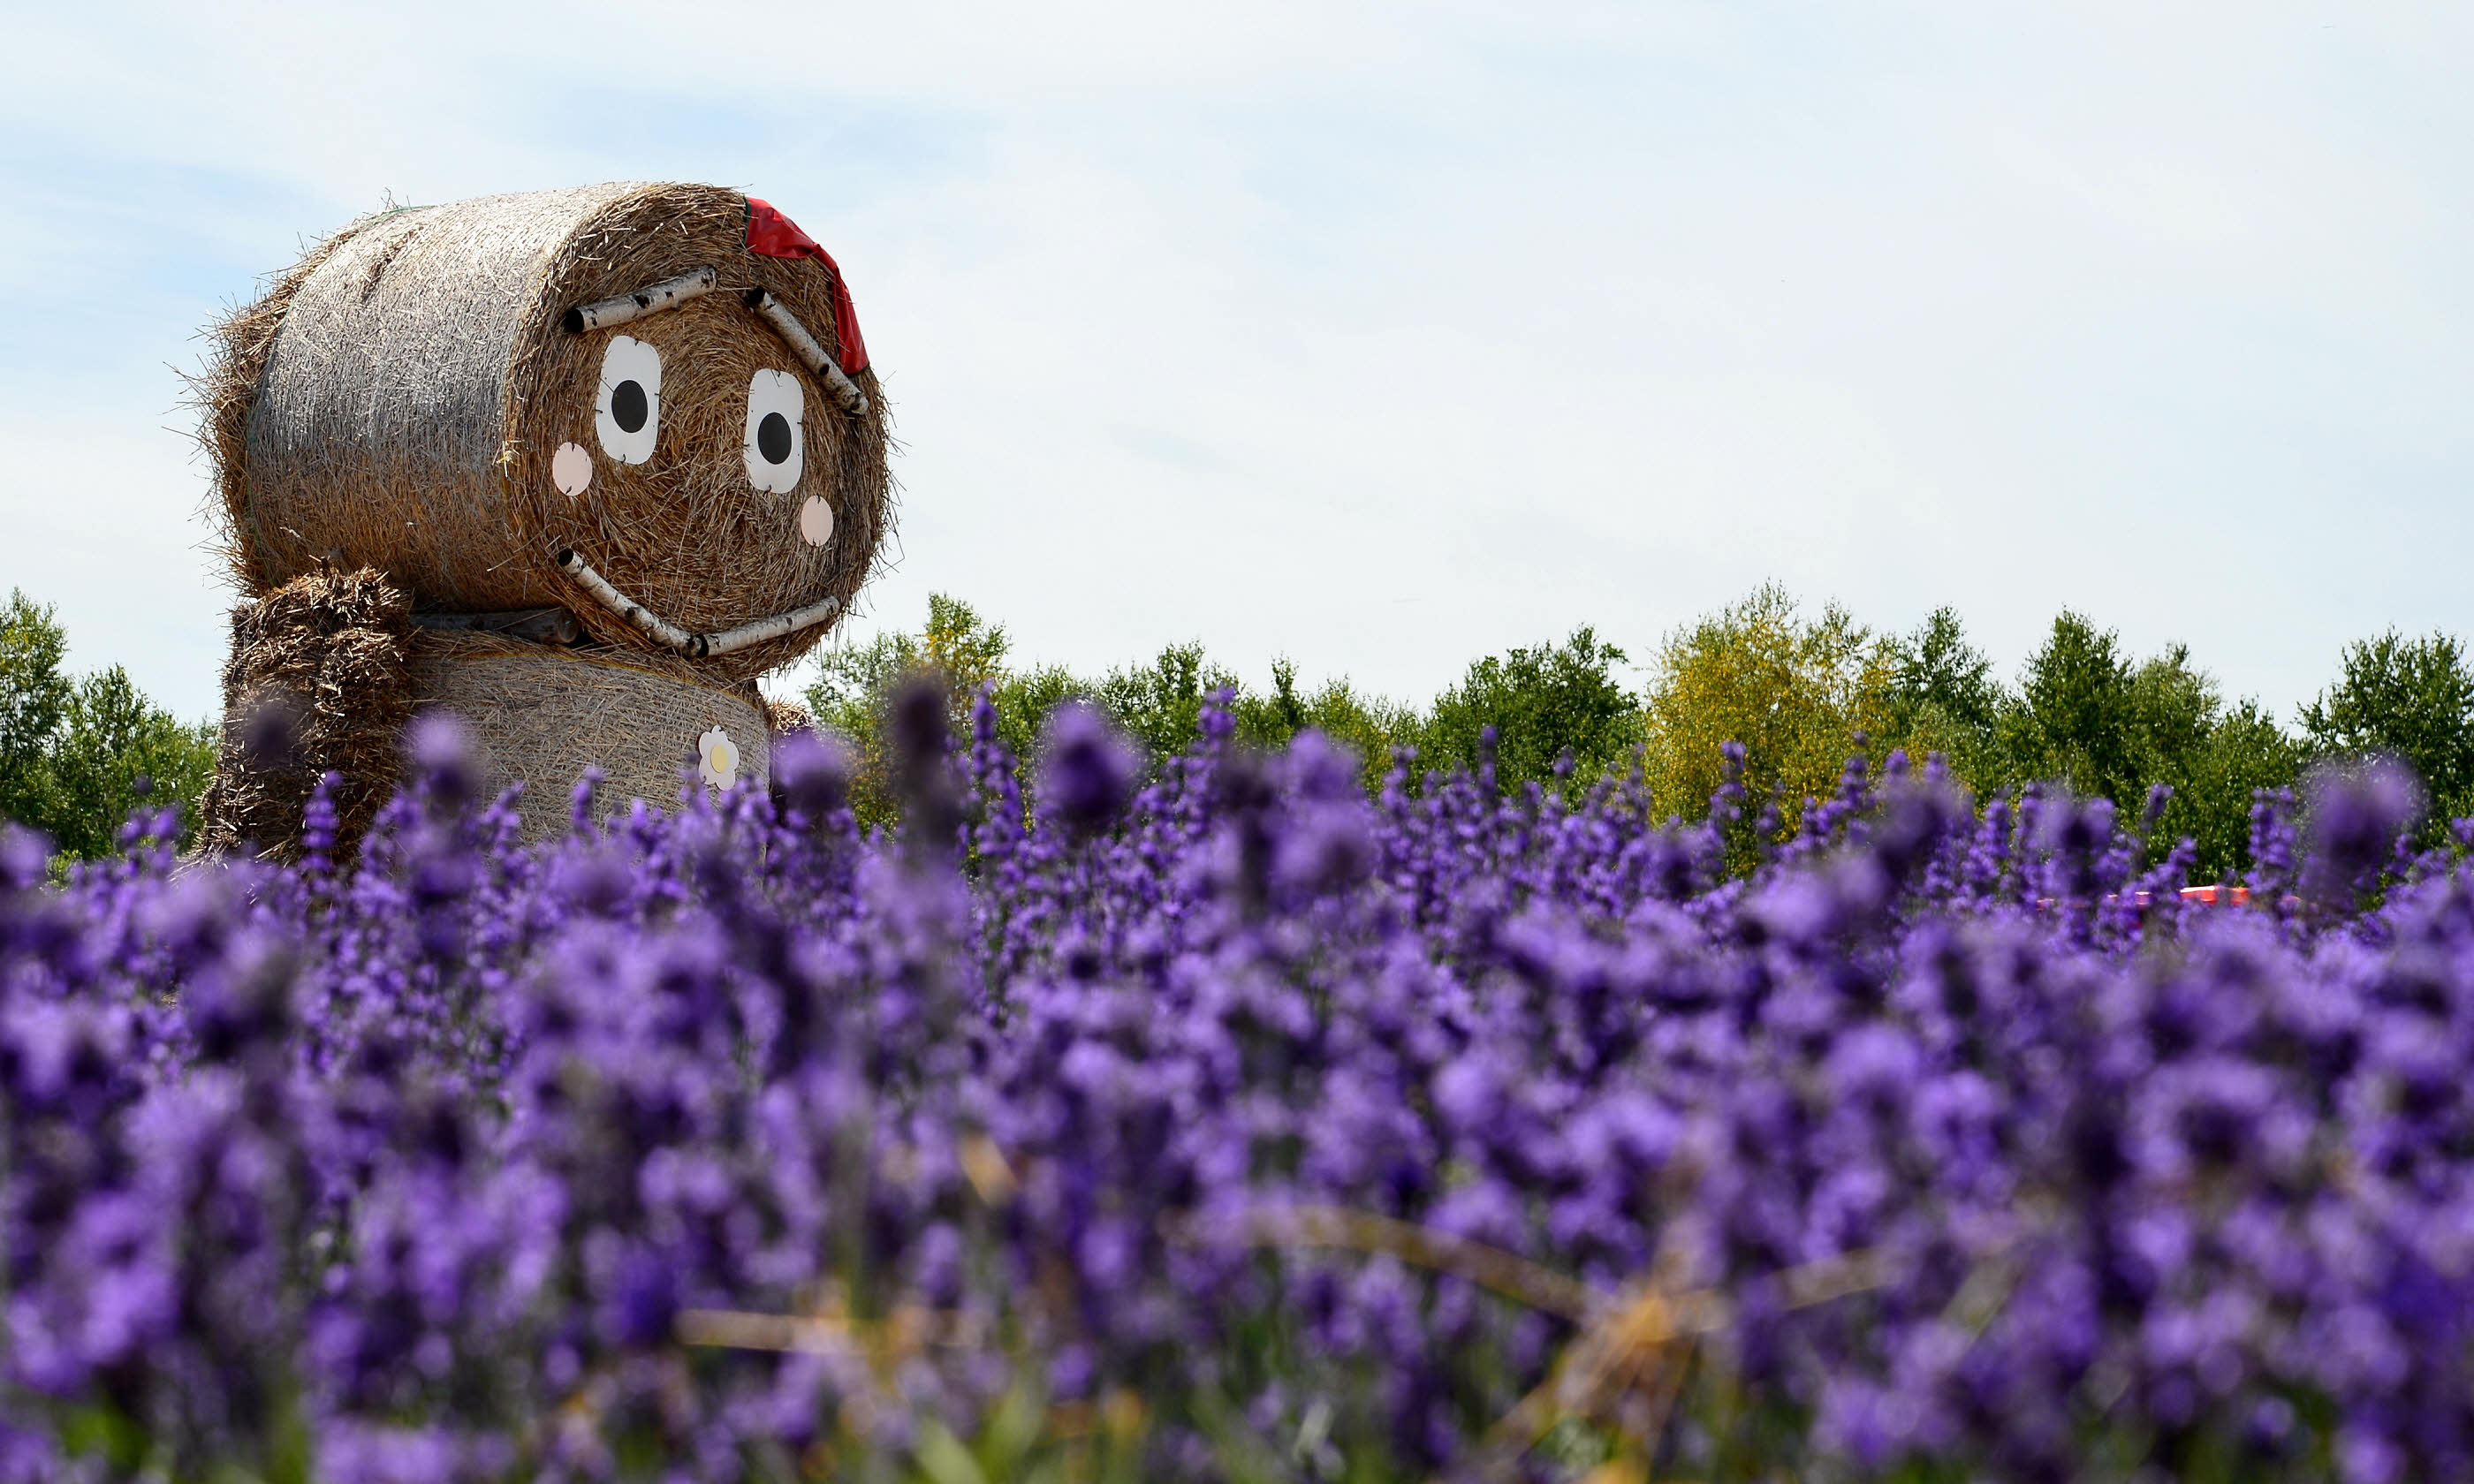 Strawman in Lavender Field, Japan. (Shutterstock.com. See credit below)